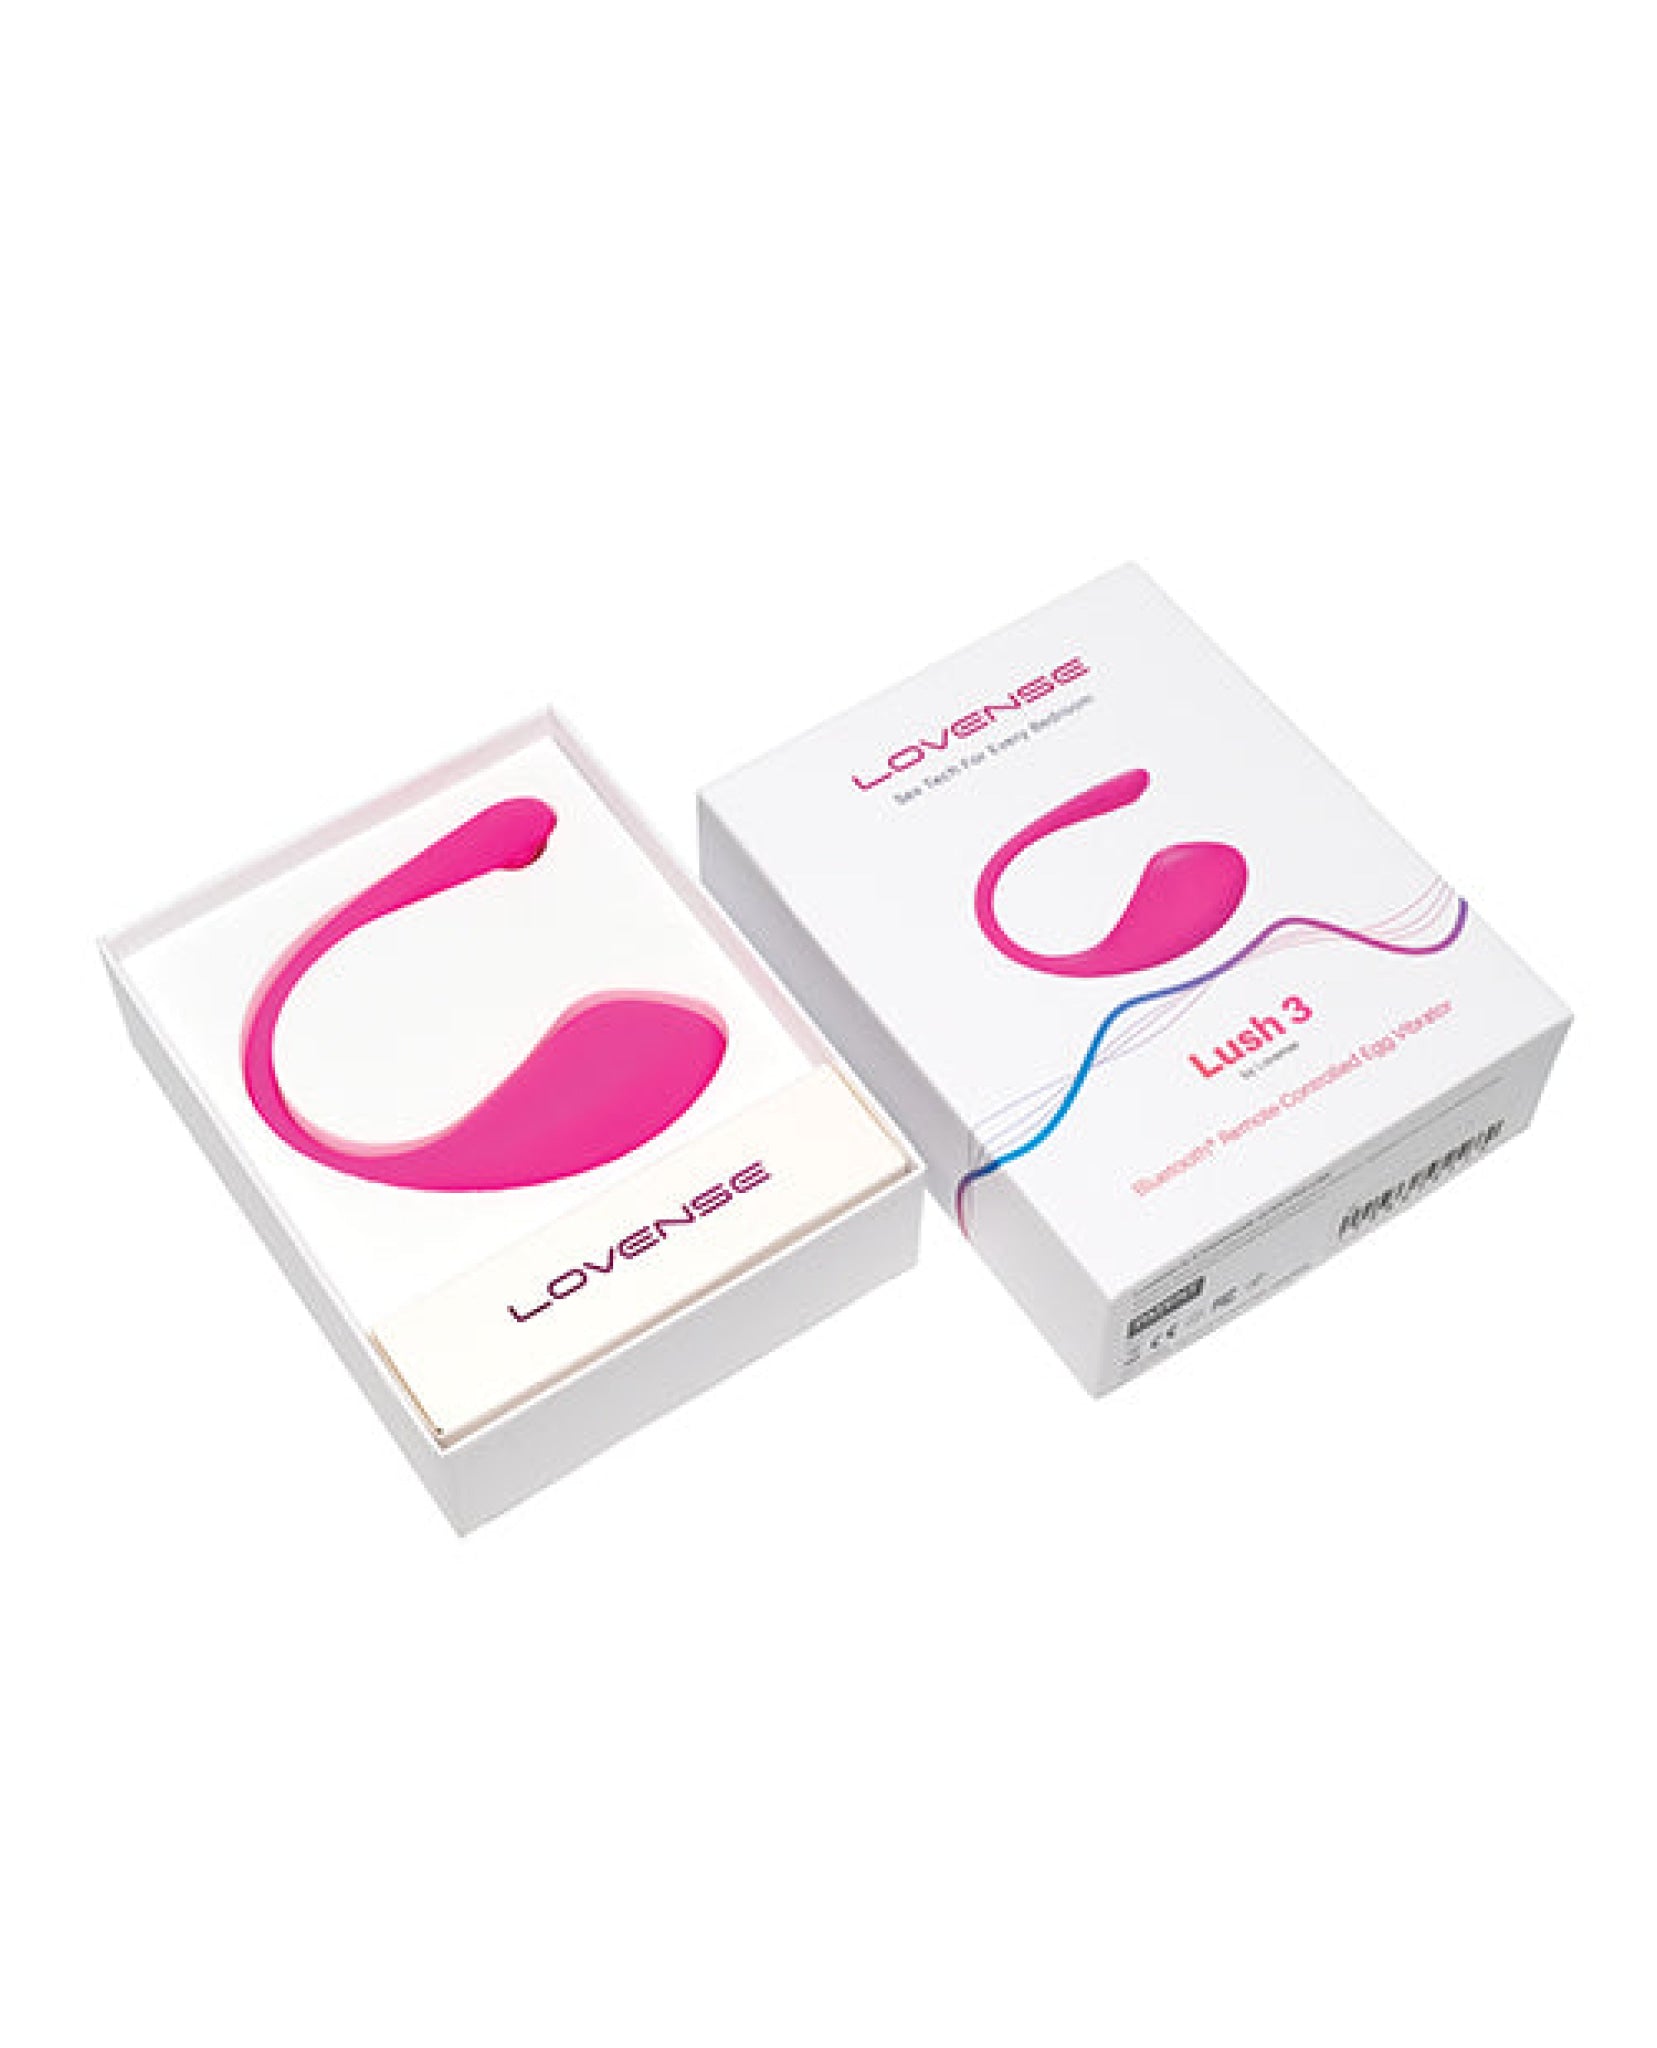 Lovense Lush 3.0 Sound Activated Camming Vibrator - Pink Lovense®